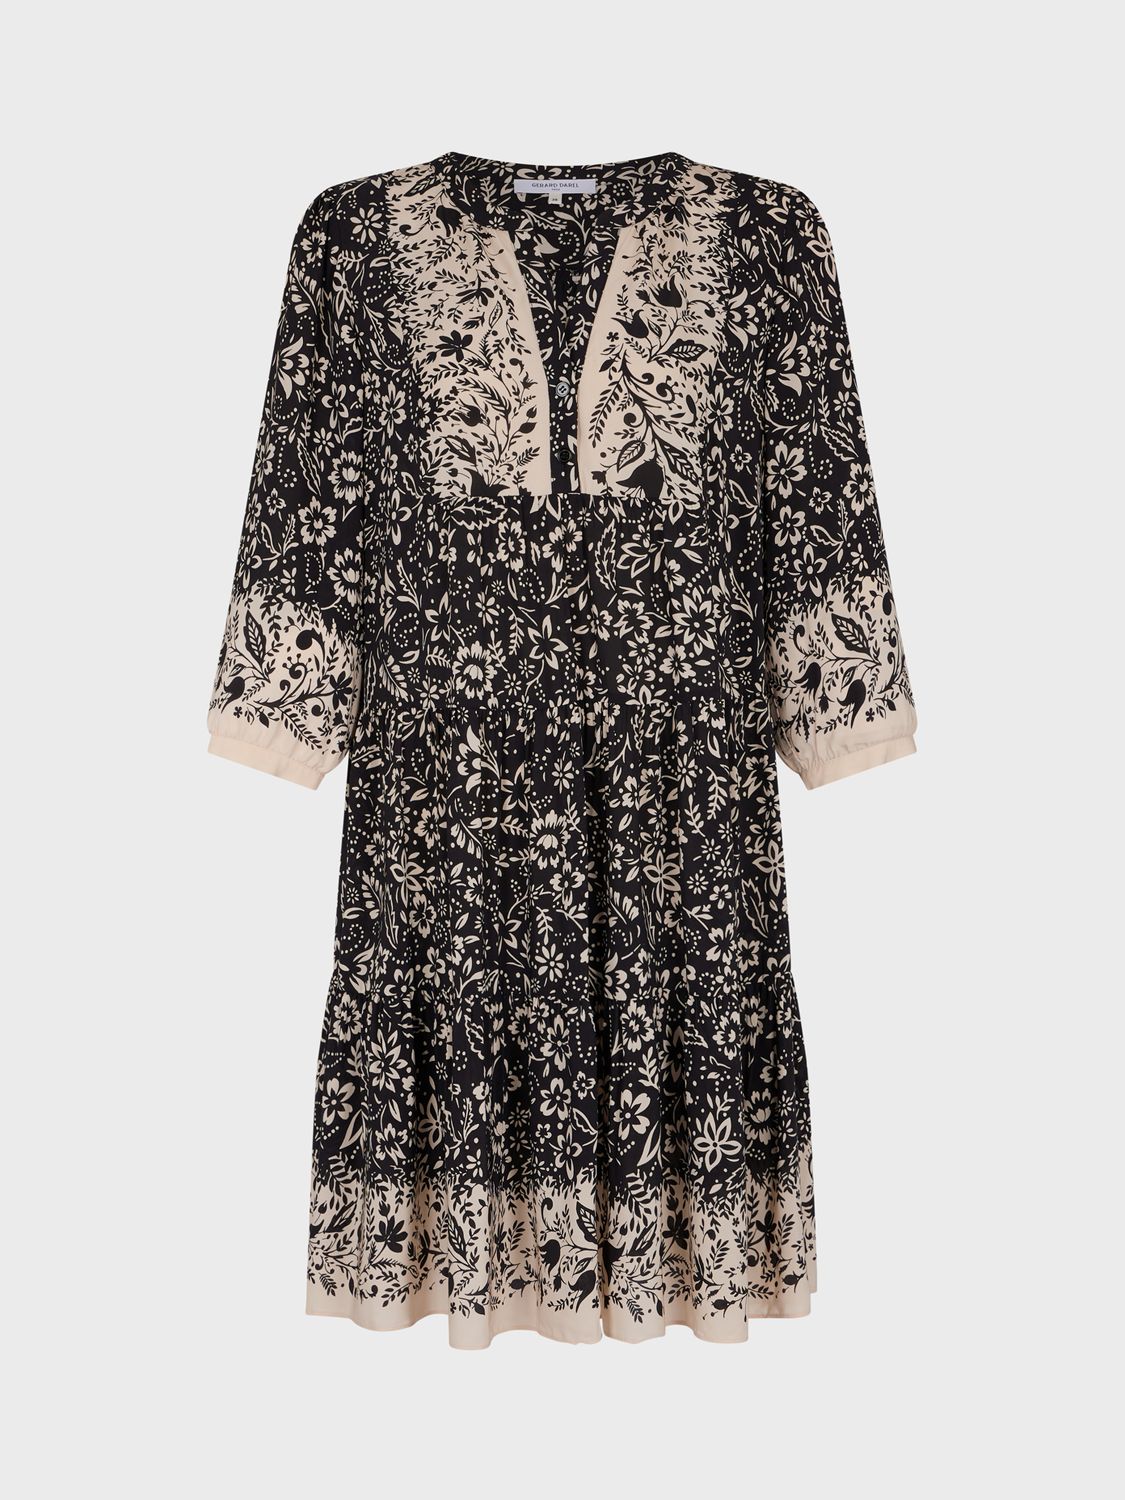 Gerard Darel Eliette Floral Print Dress, Black/Beige at John Lewis ...